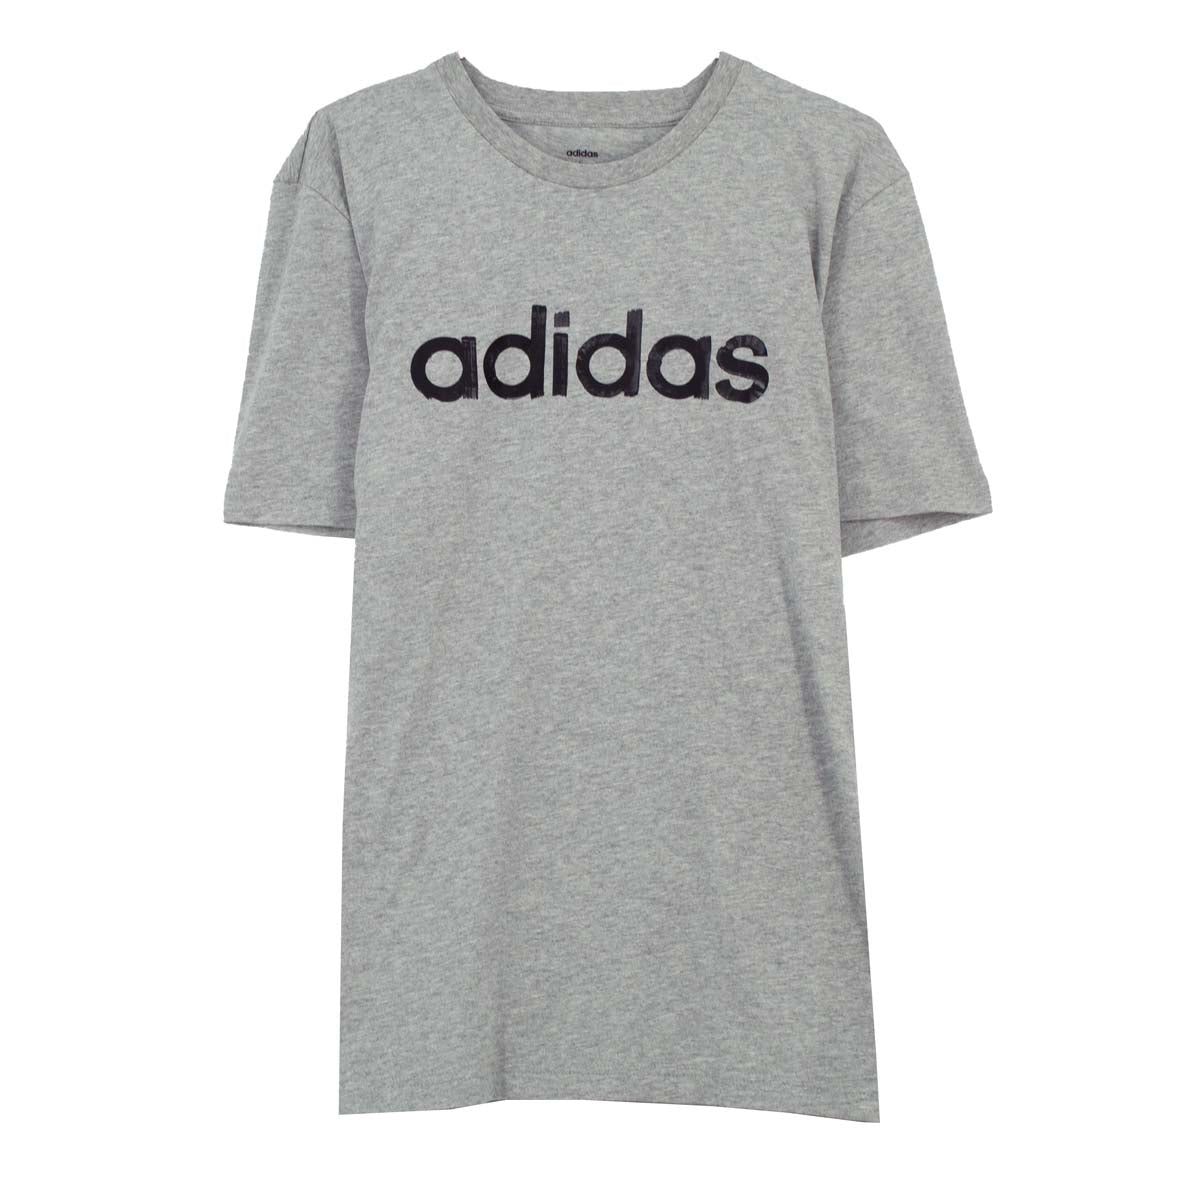 Adidas Grfx Lnr T 3 Herren T-Shirts Graphics kurzarm Shirt Baumwolle EI4580 L